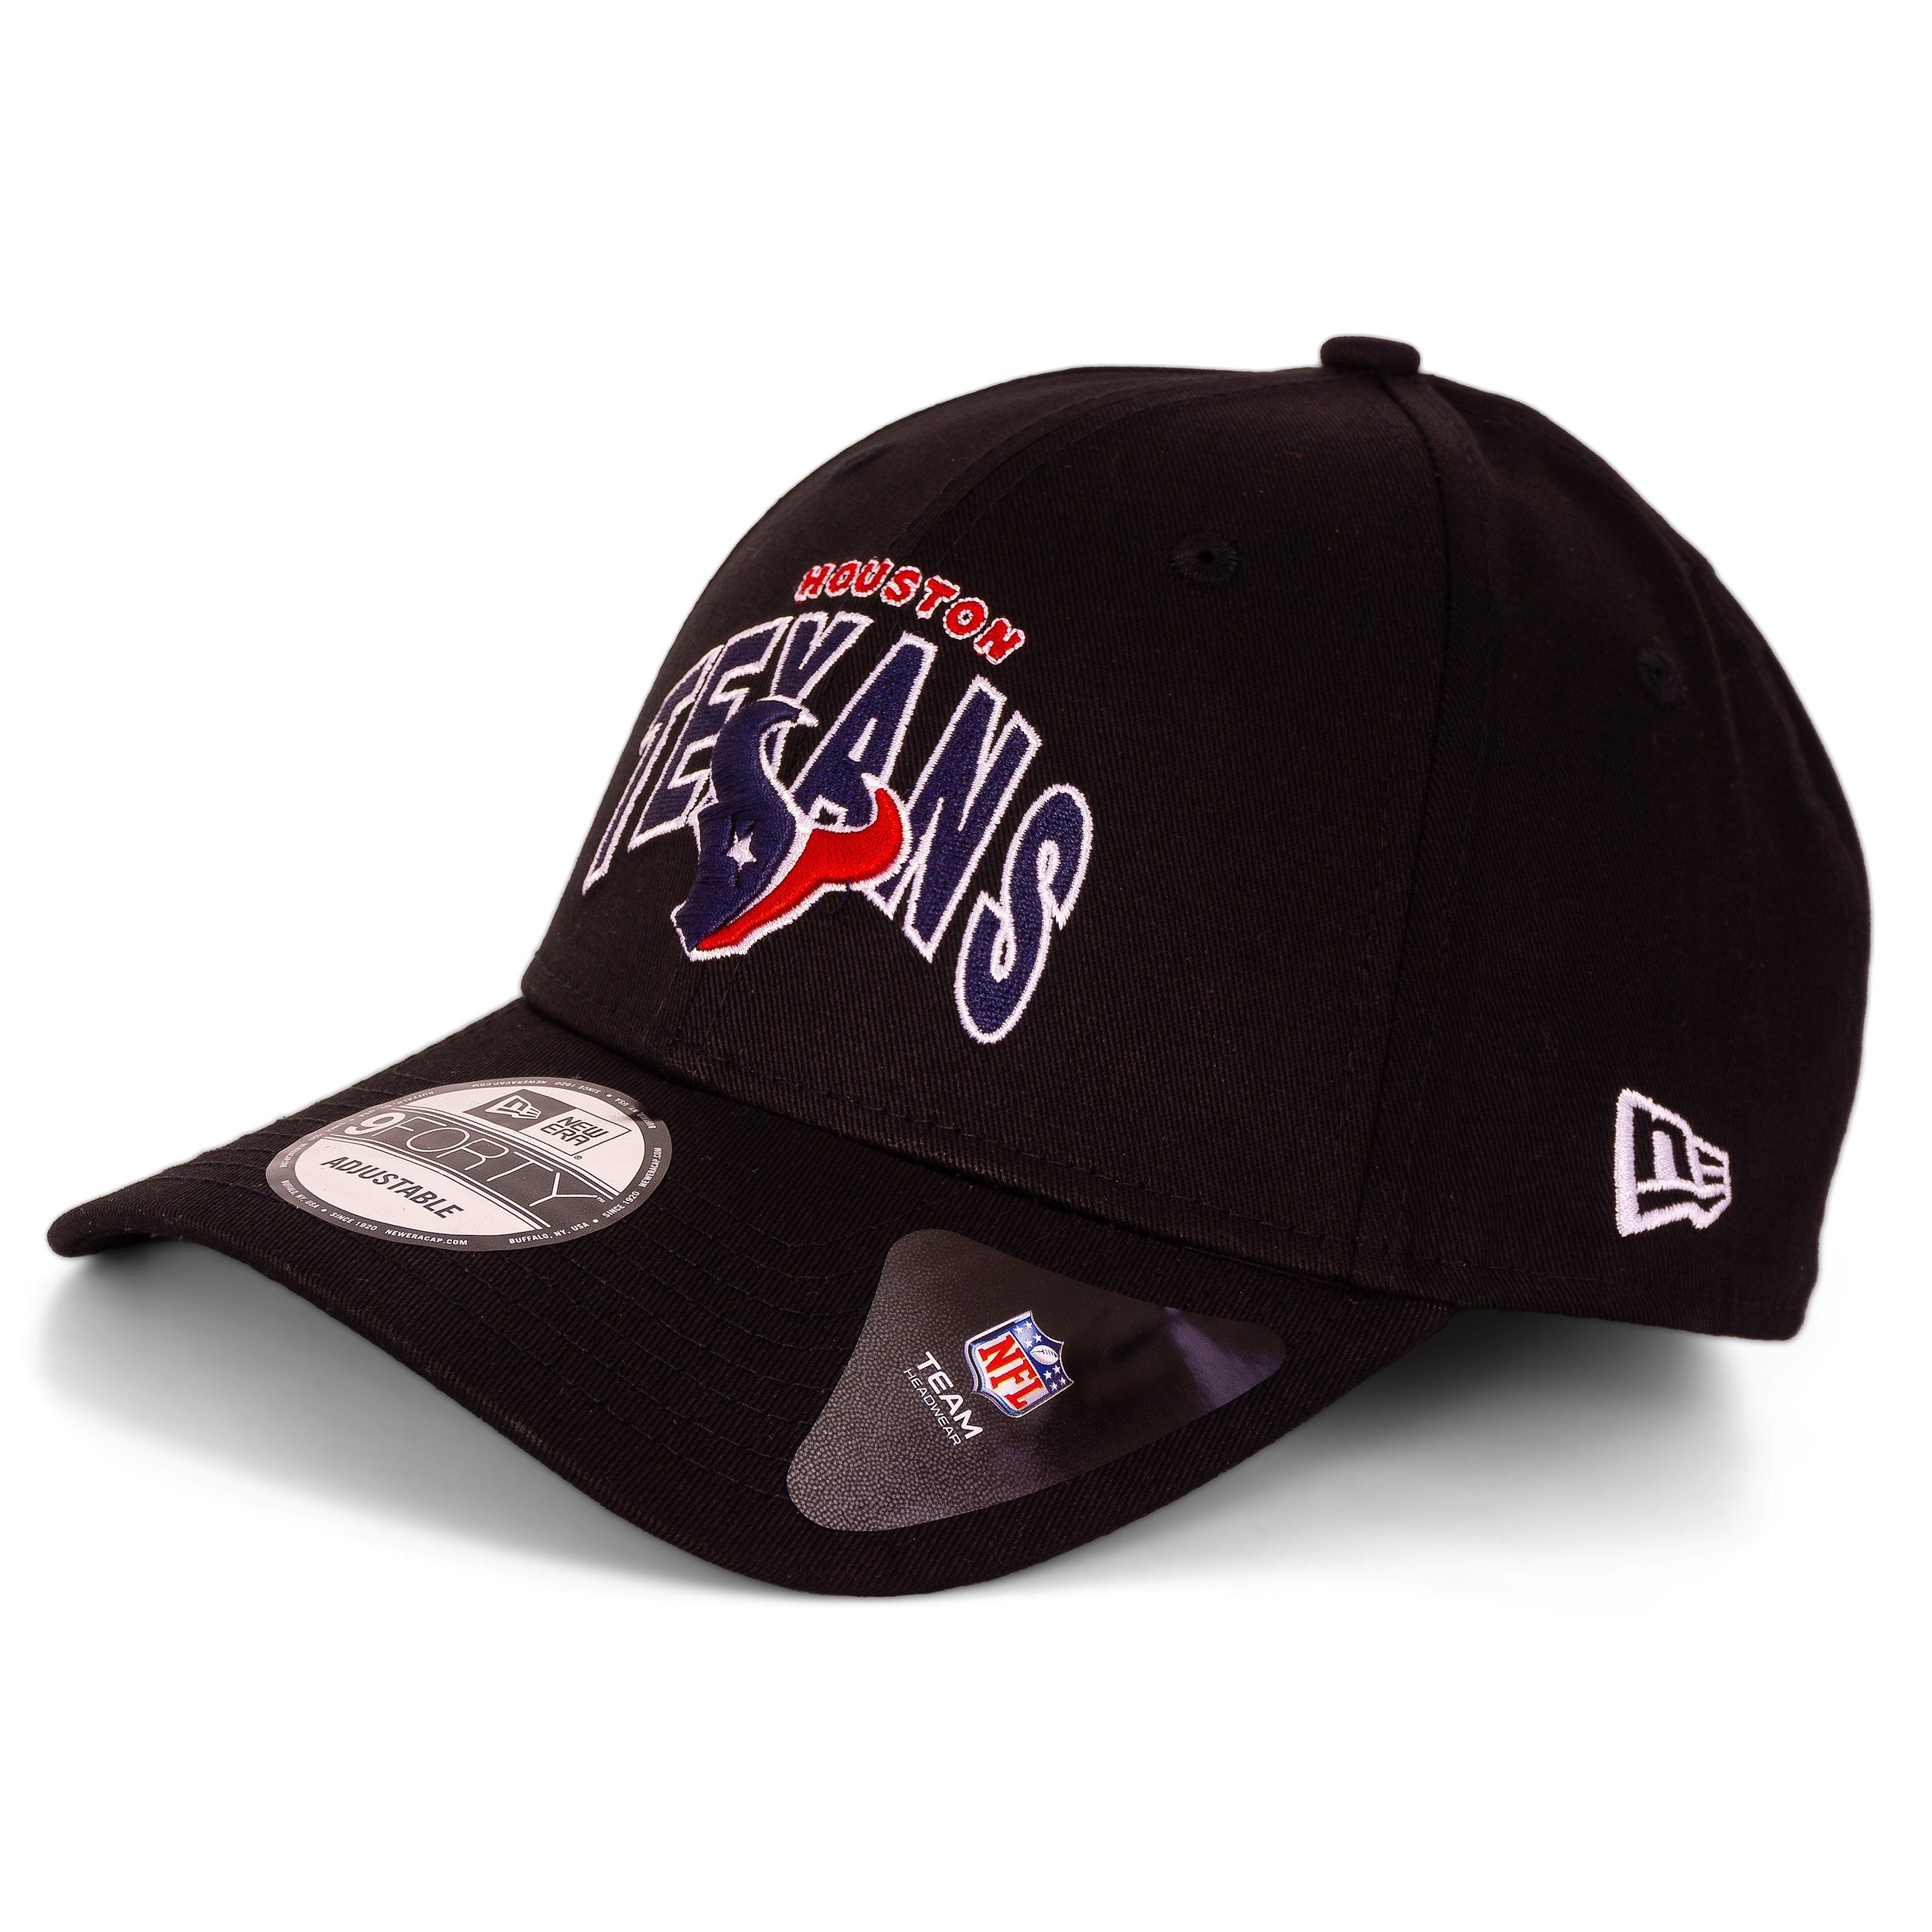 Cap Era Cap Houston New Texans League Era 940 New (1-St) HouTex Baseball